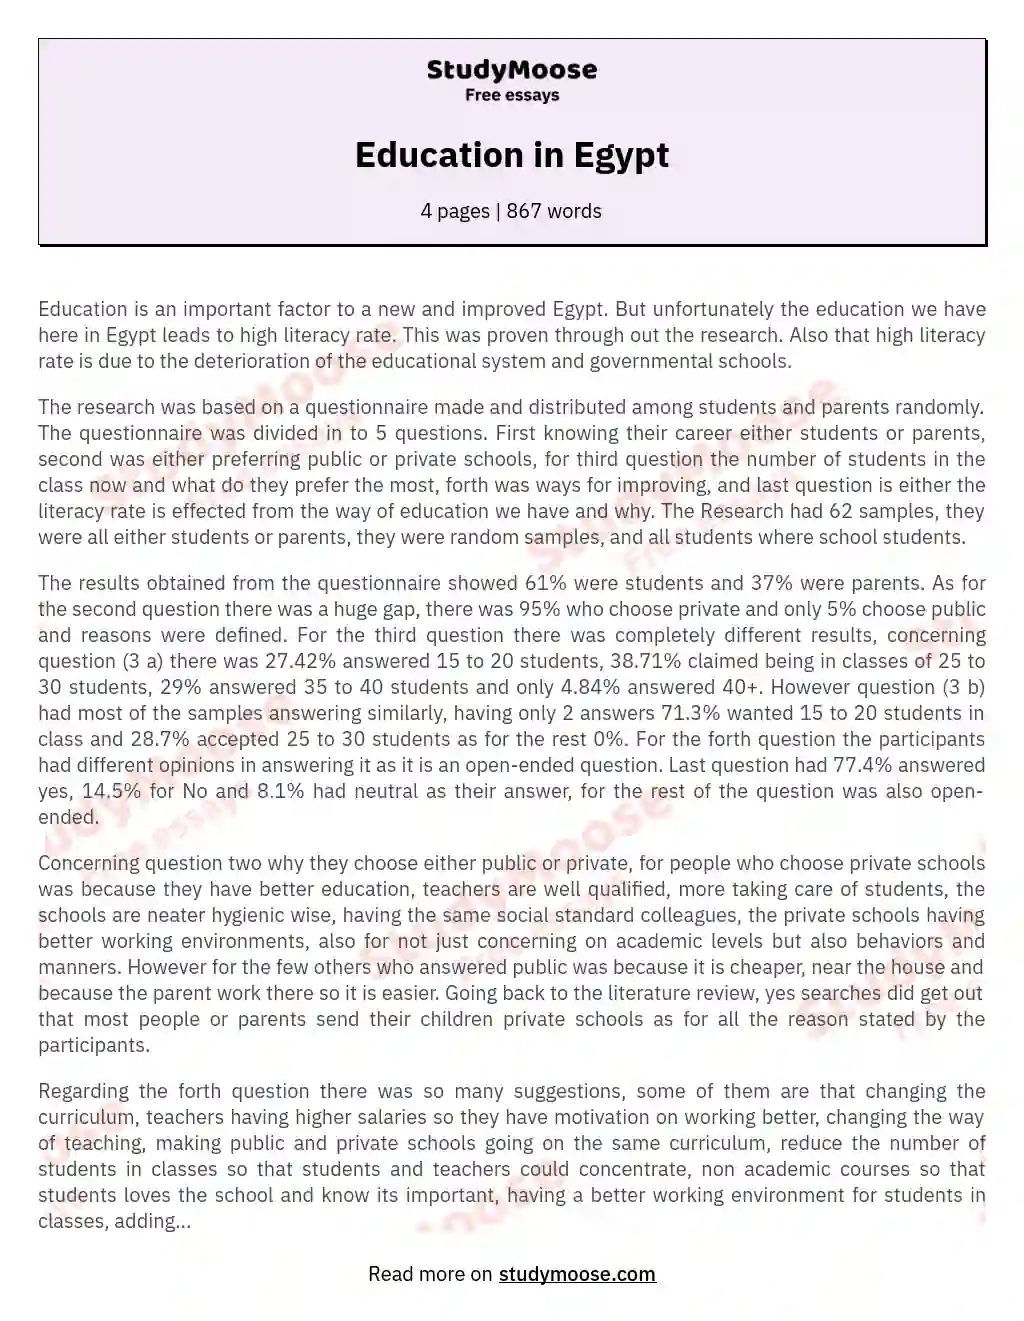 Education in Egypt essay